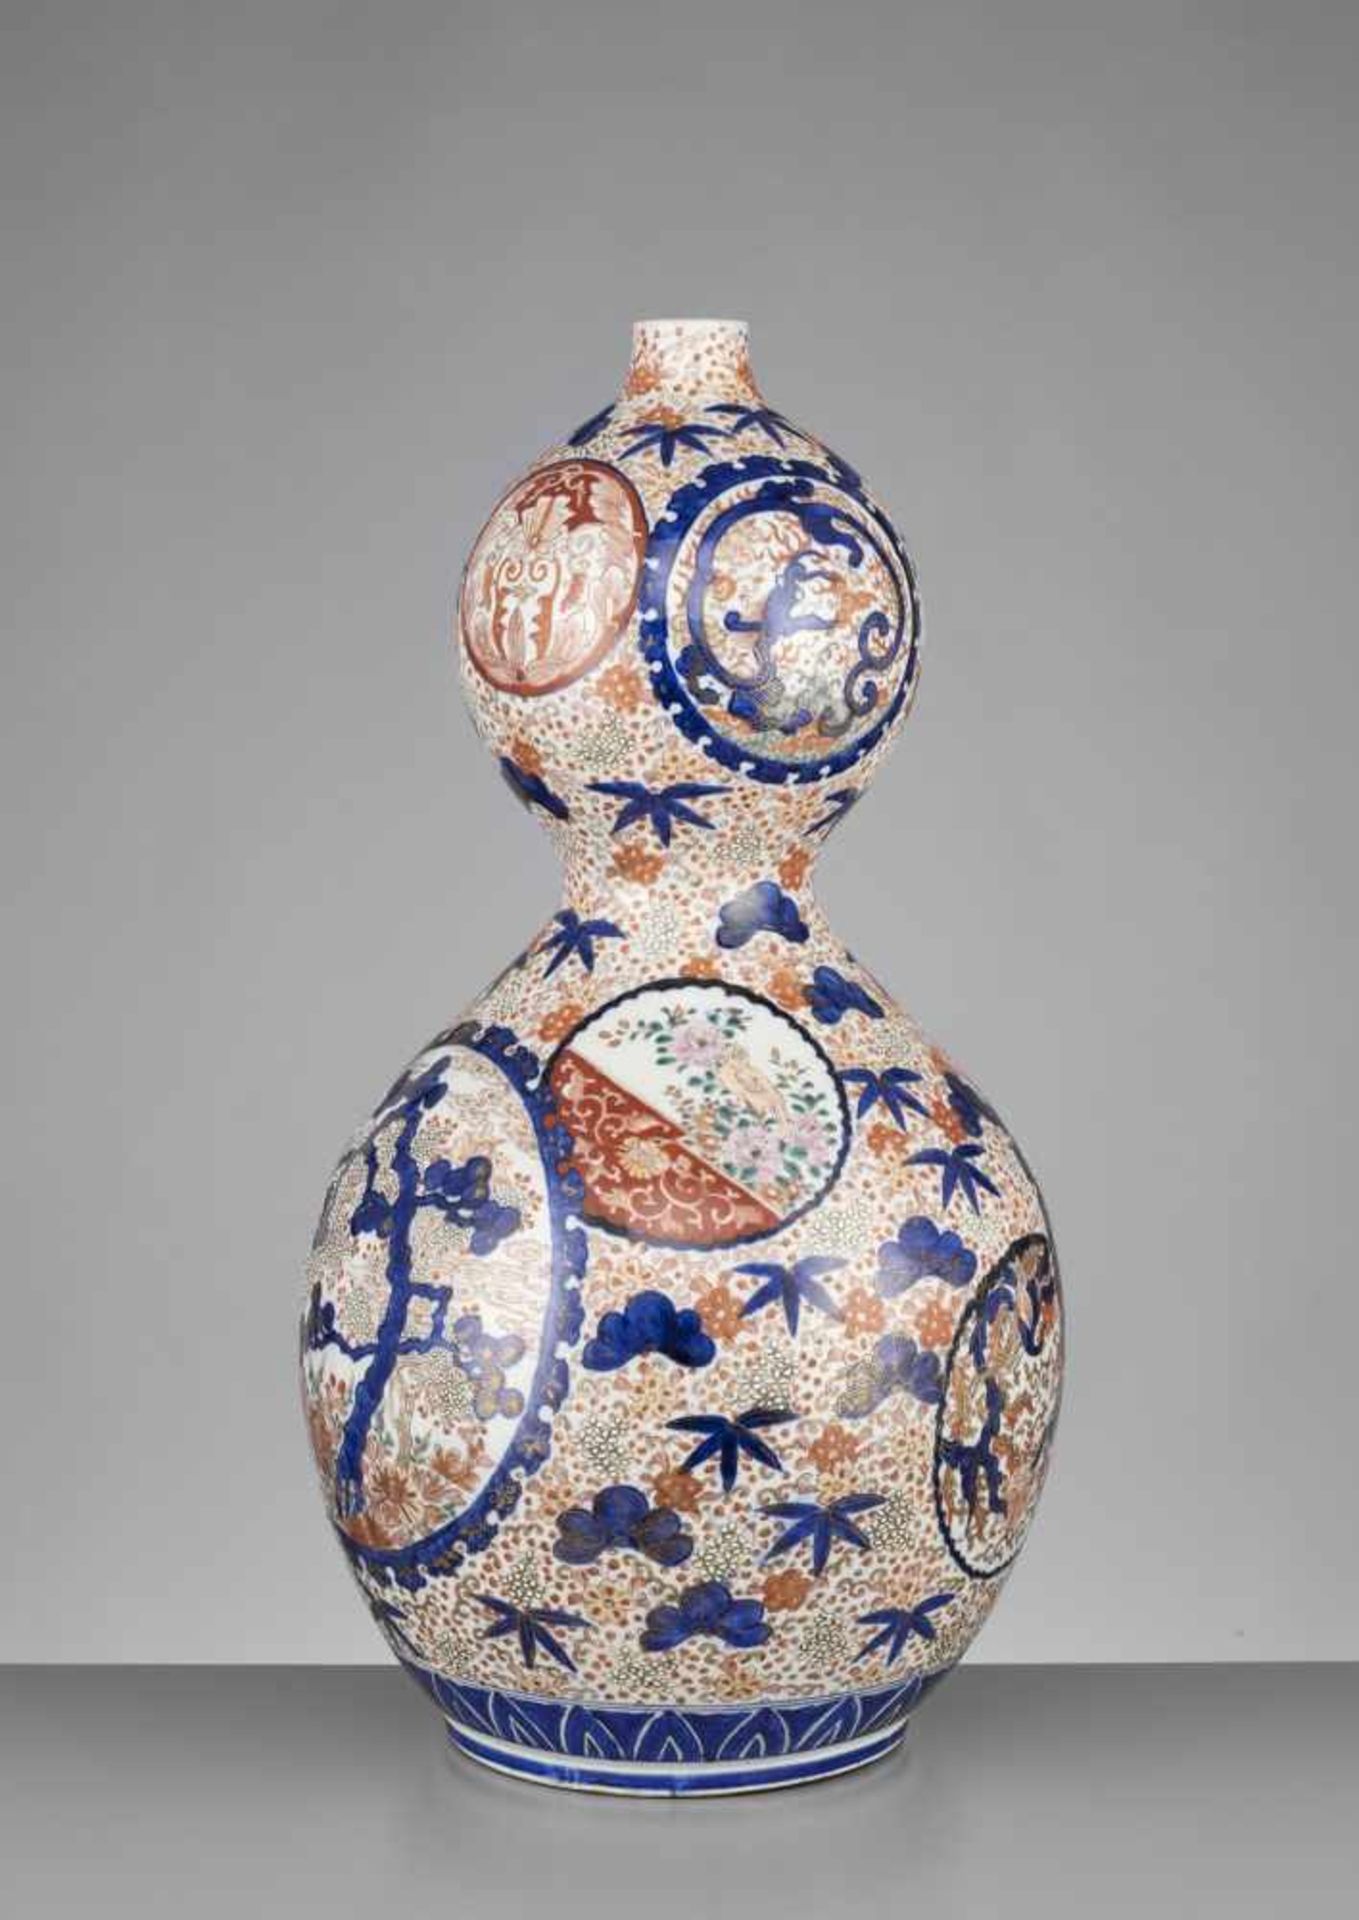 A VERY LARGE IMARI PORCELAIN DOUBLE-GOURD VASE Japan, ca. 1900, Meiji period (1868-1912)The vase